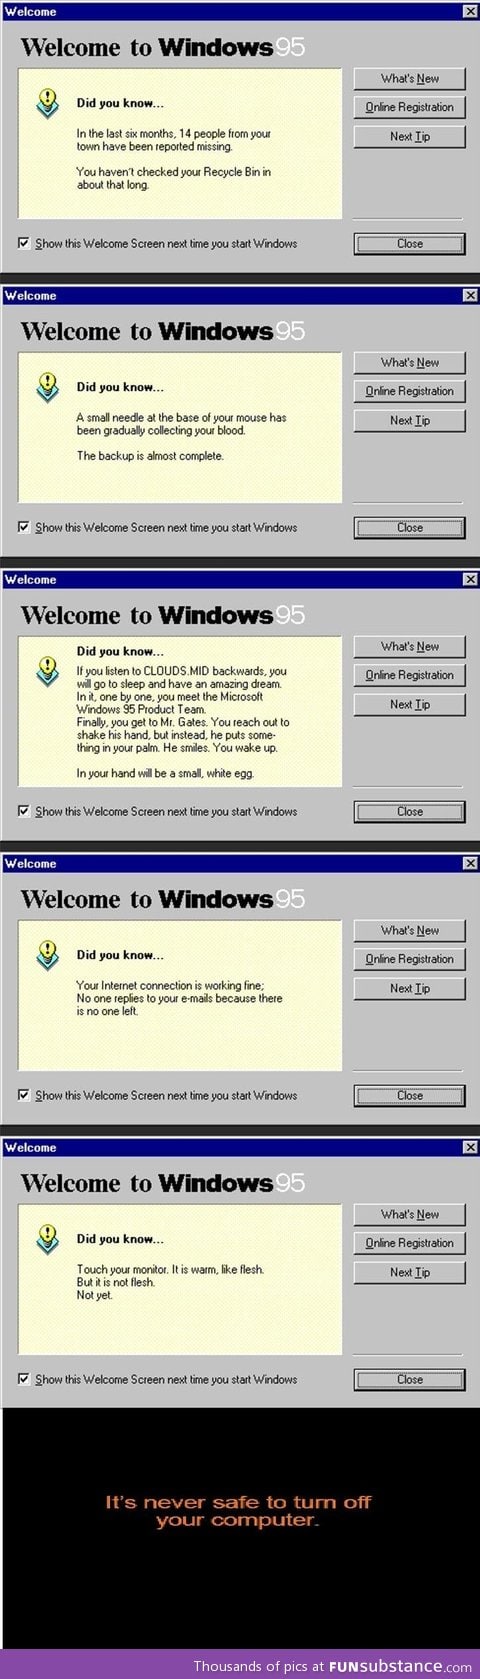 Windows 95 tips